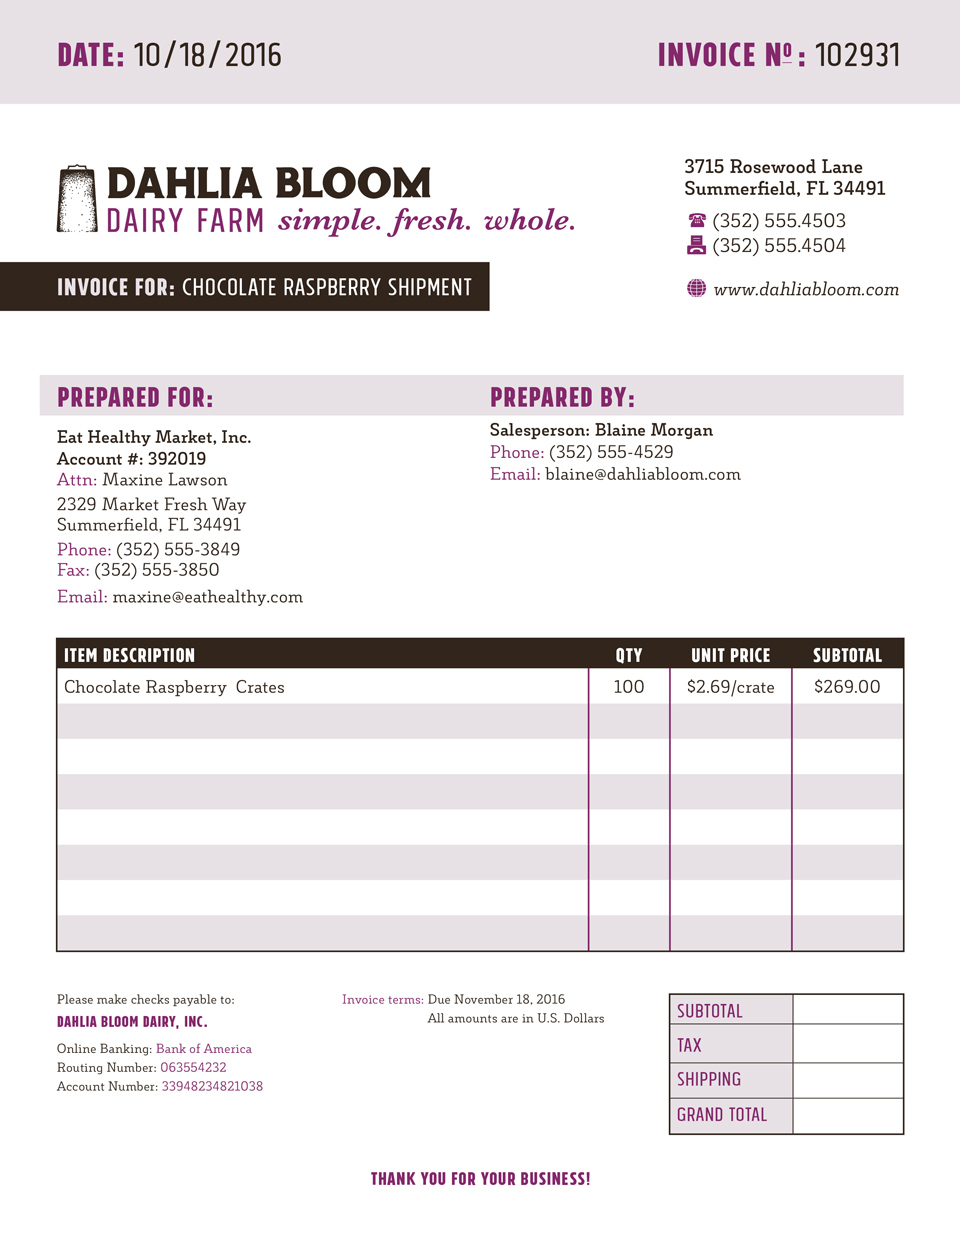 Dahlia Bloom Order Form